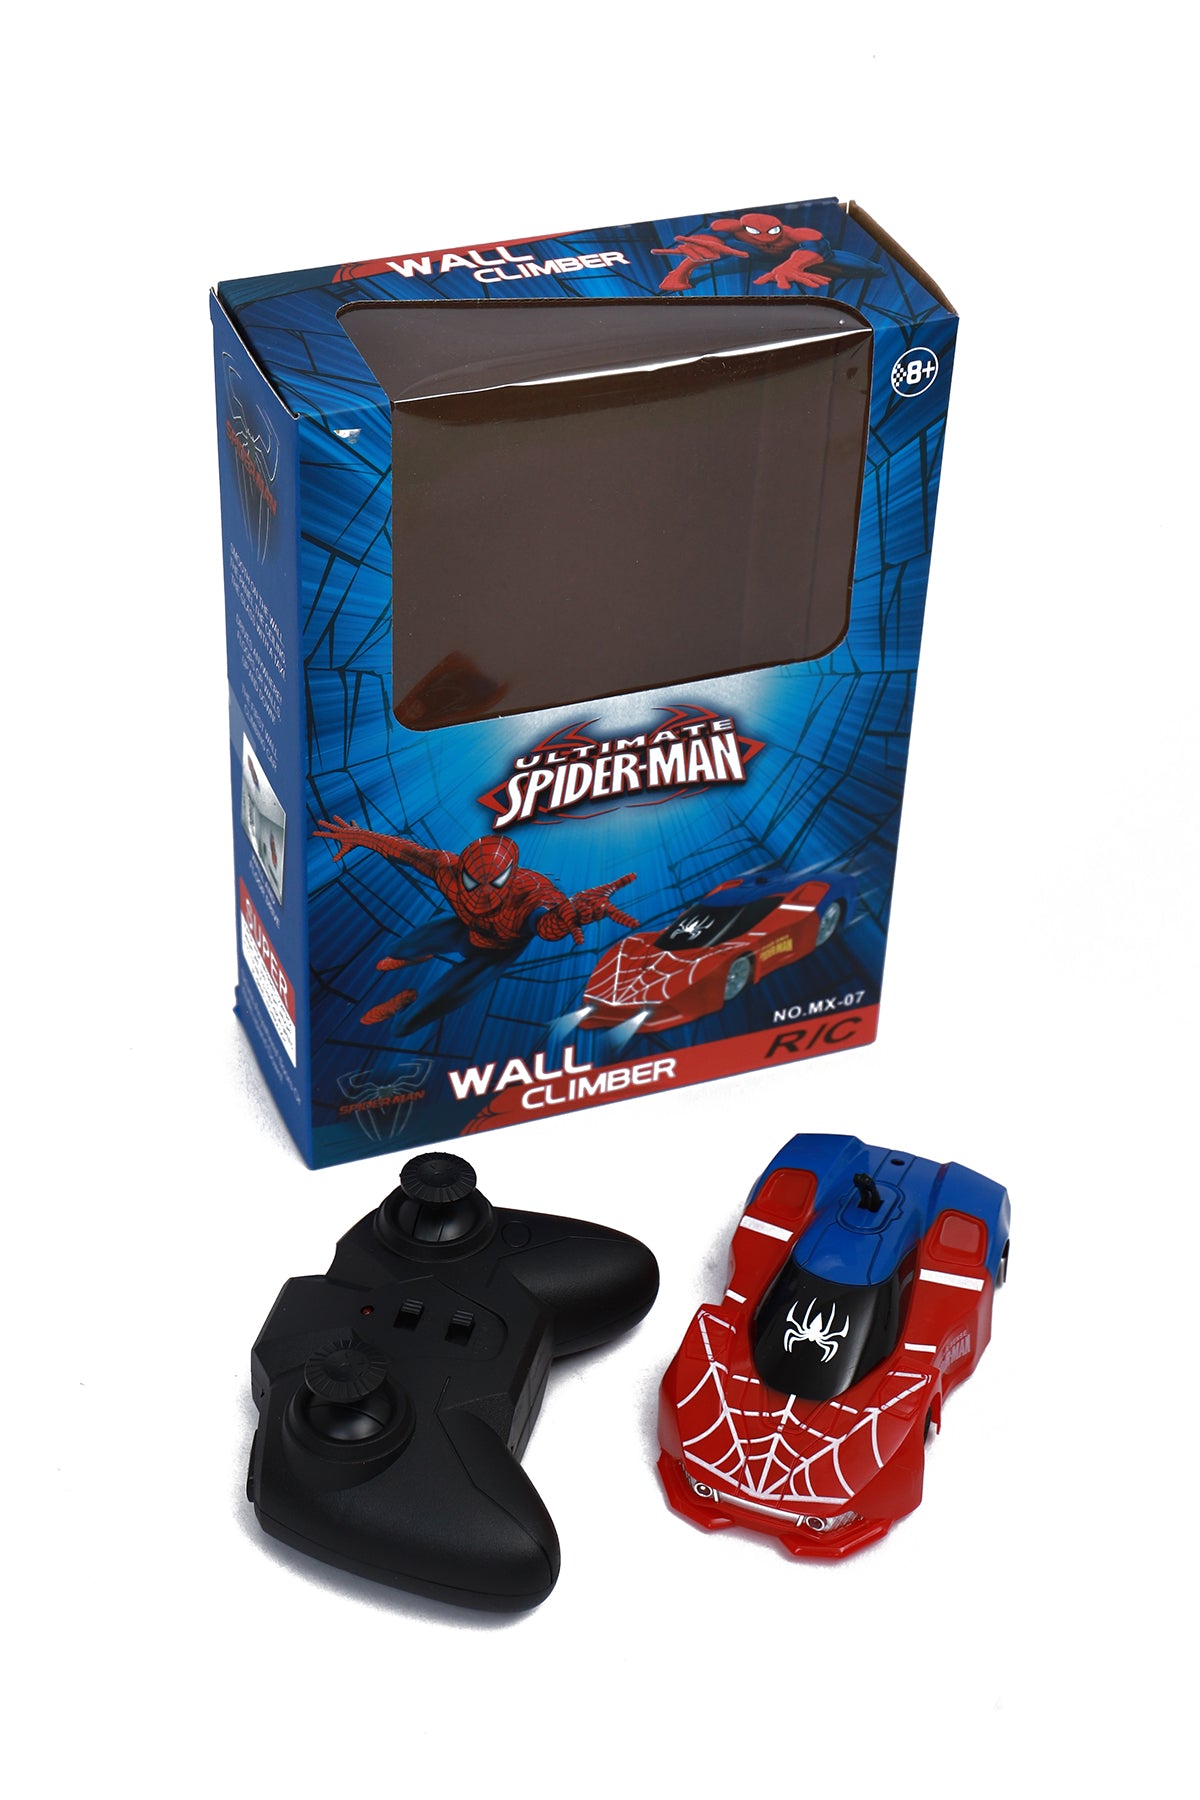 Remote Control Spiderman Wall Climber Toy Car